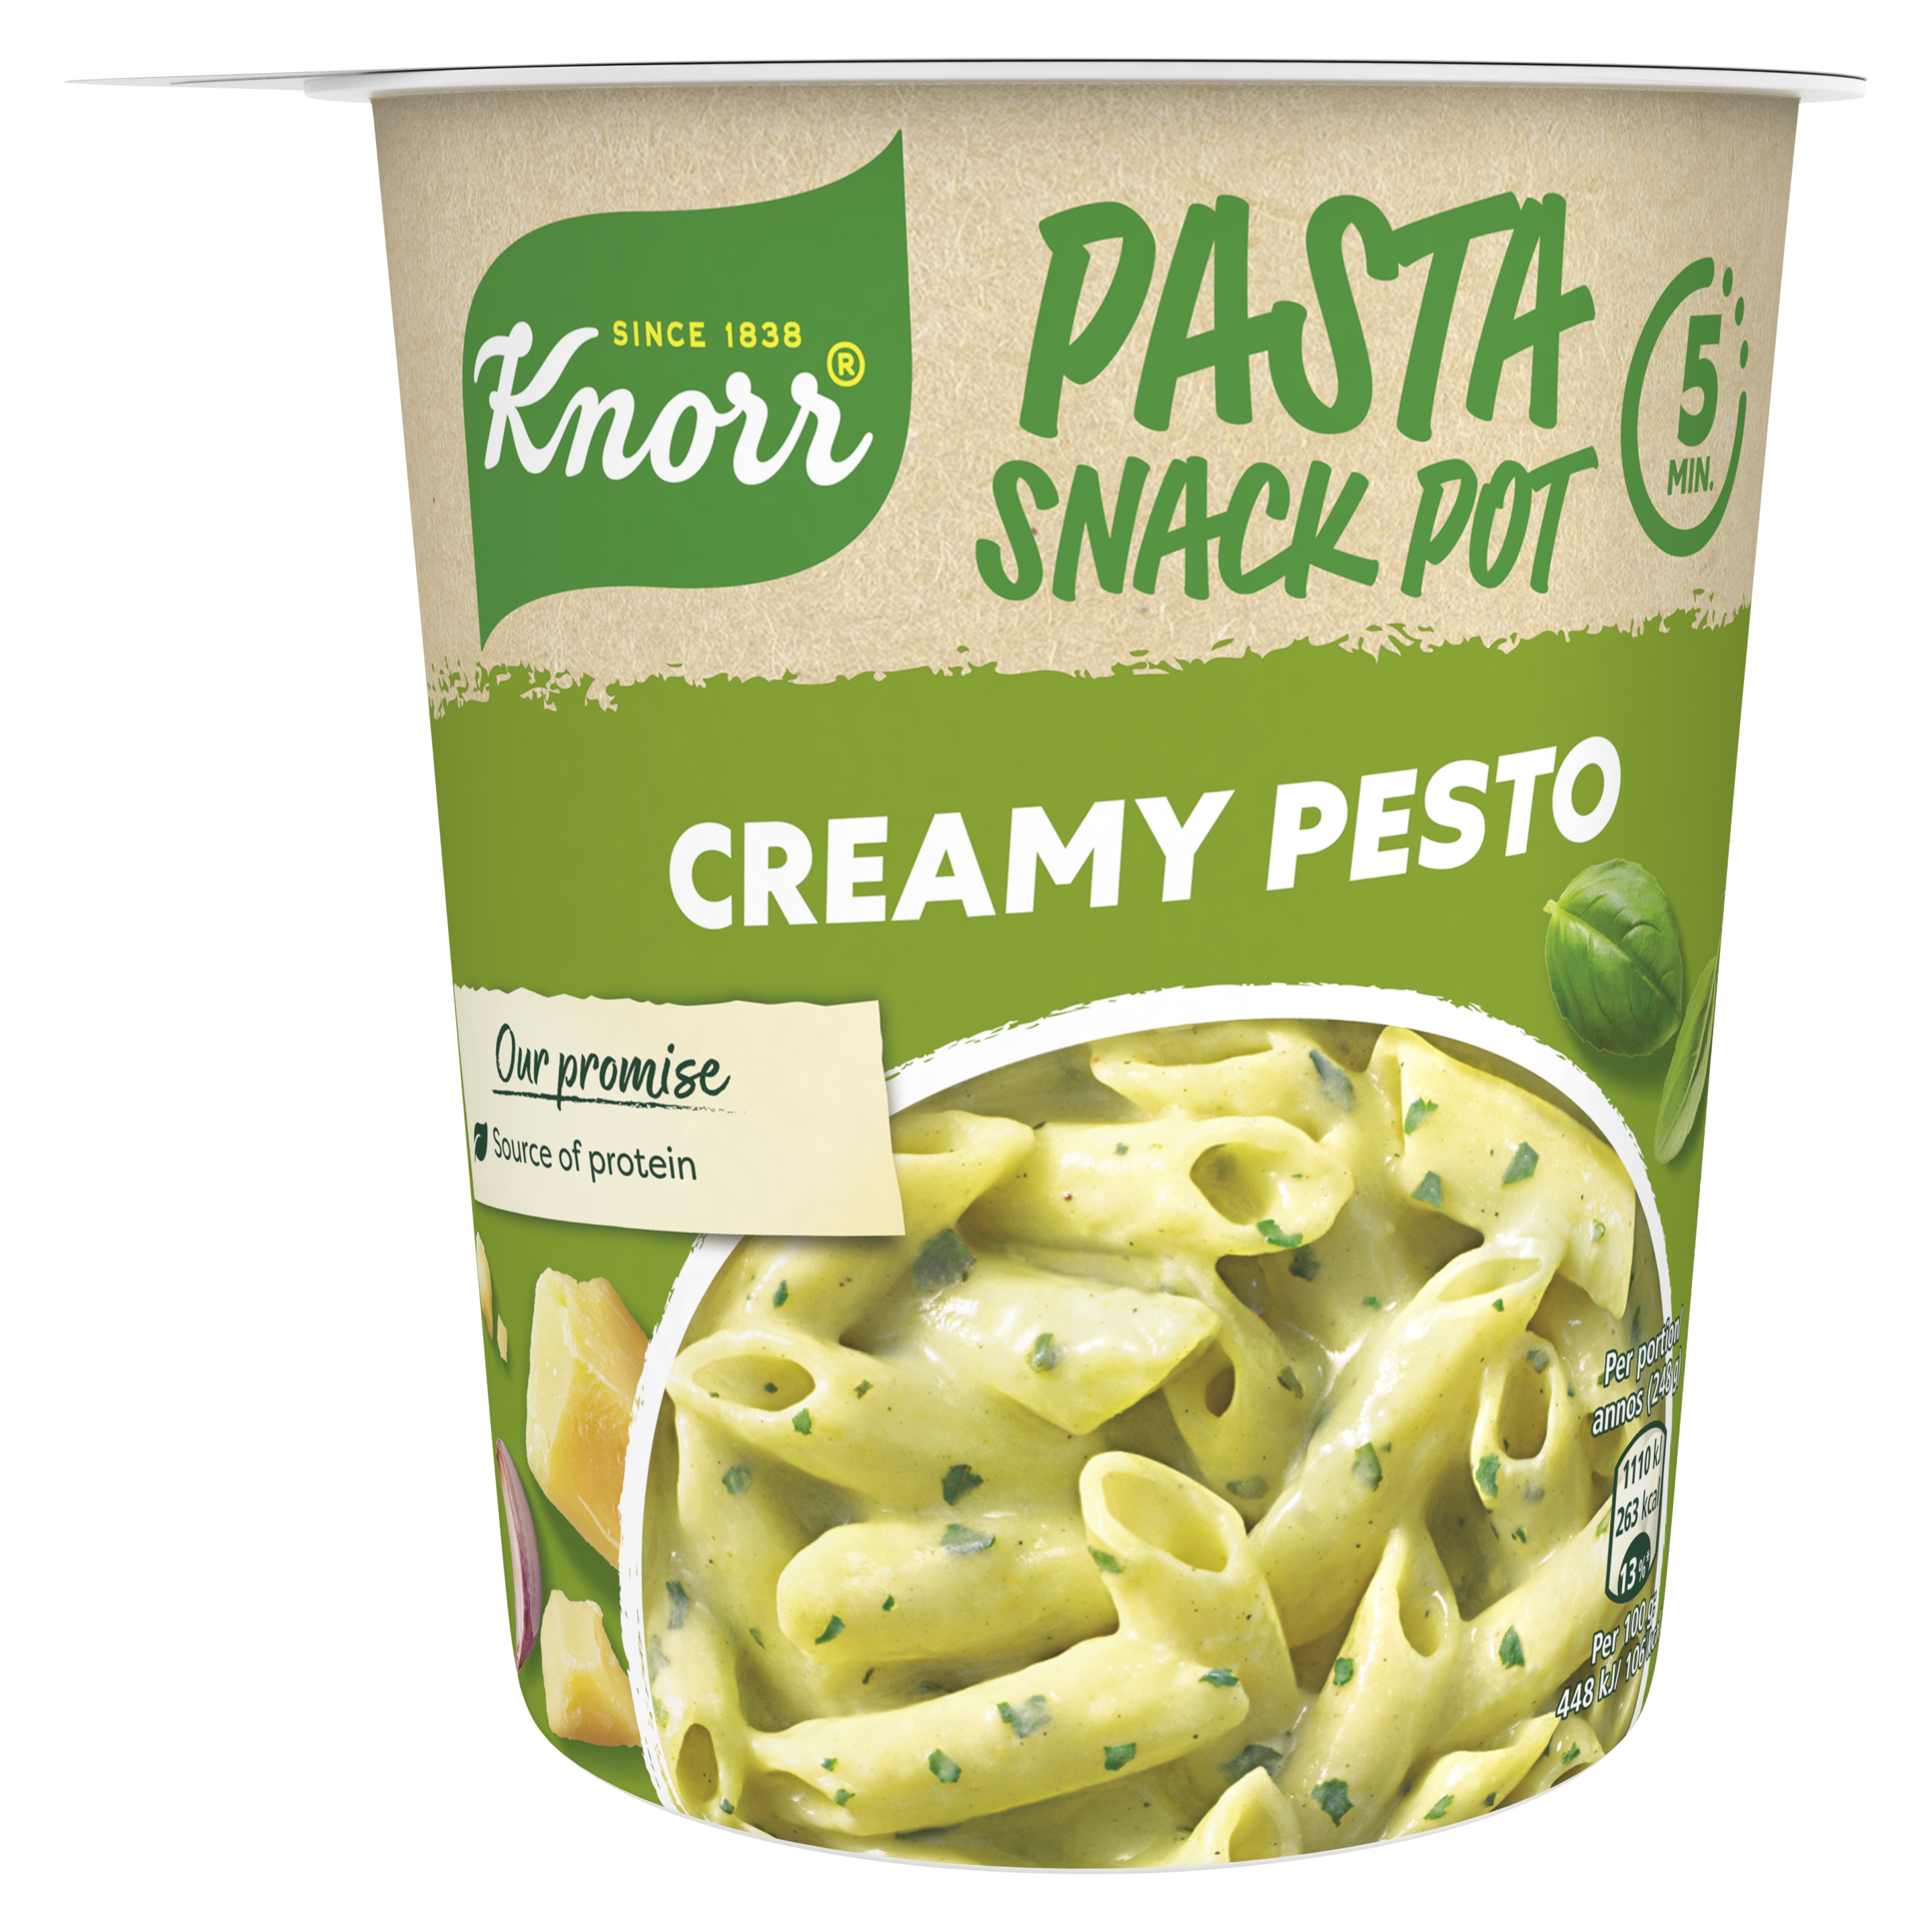 Snack Pot Creamy Pesto